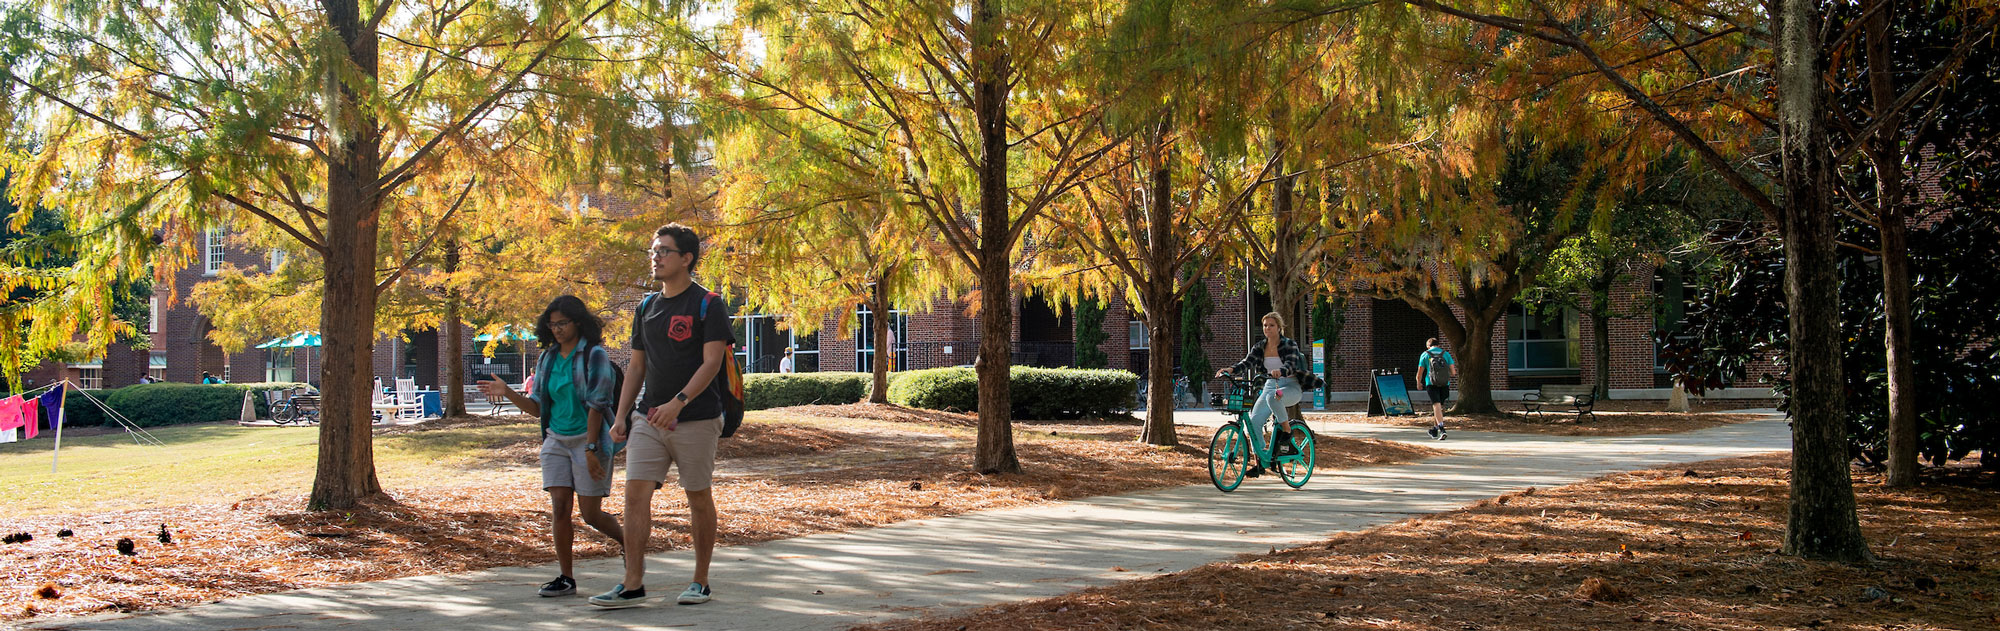 Autumn students walking campus